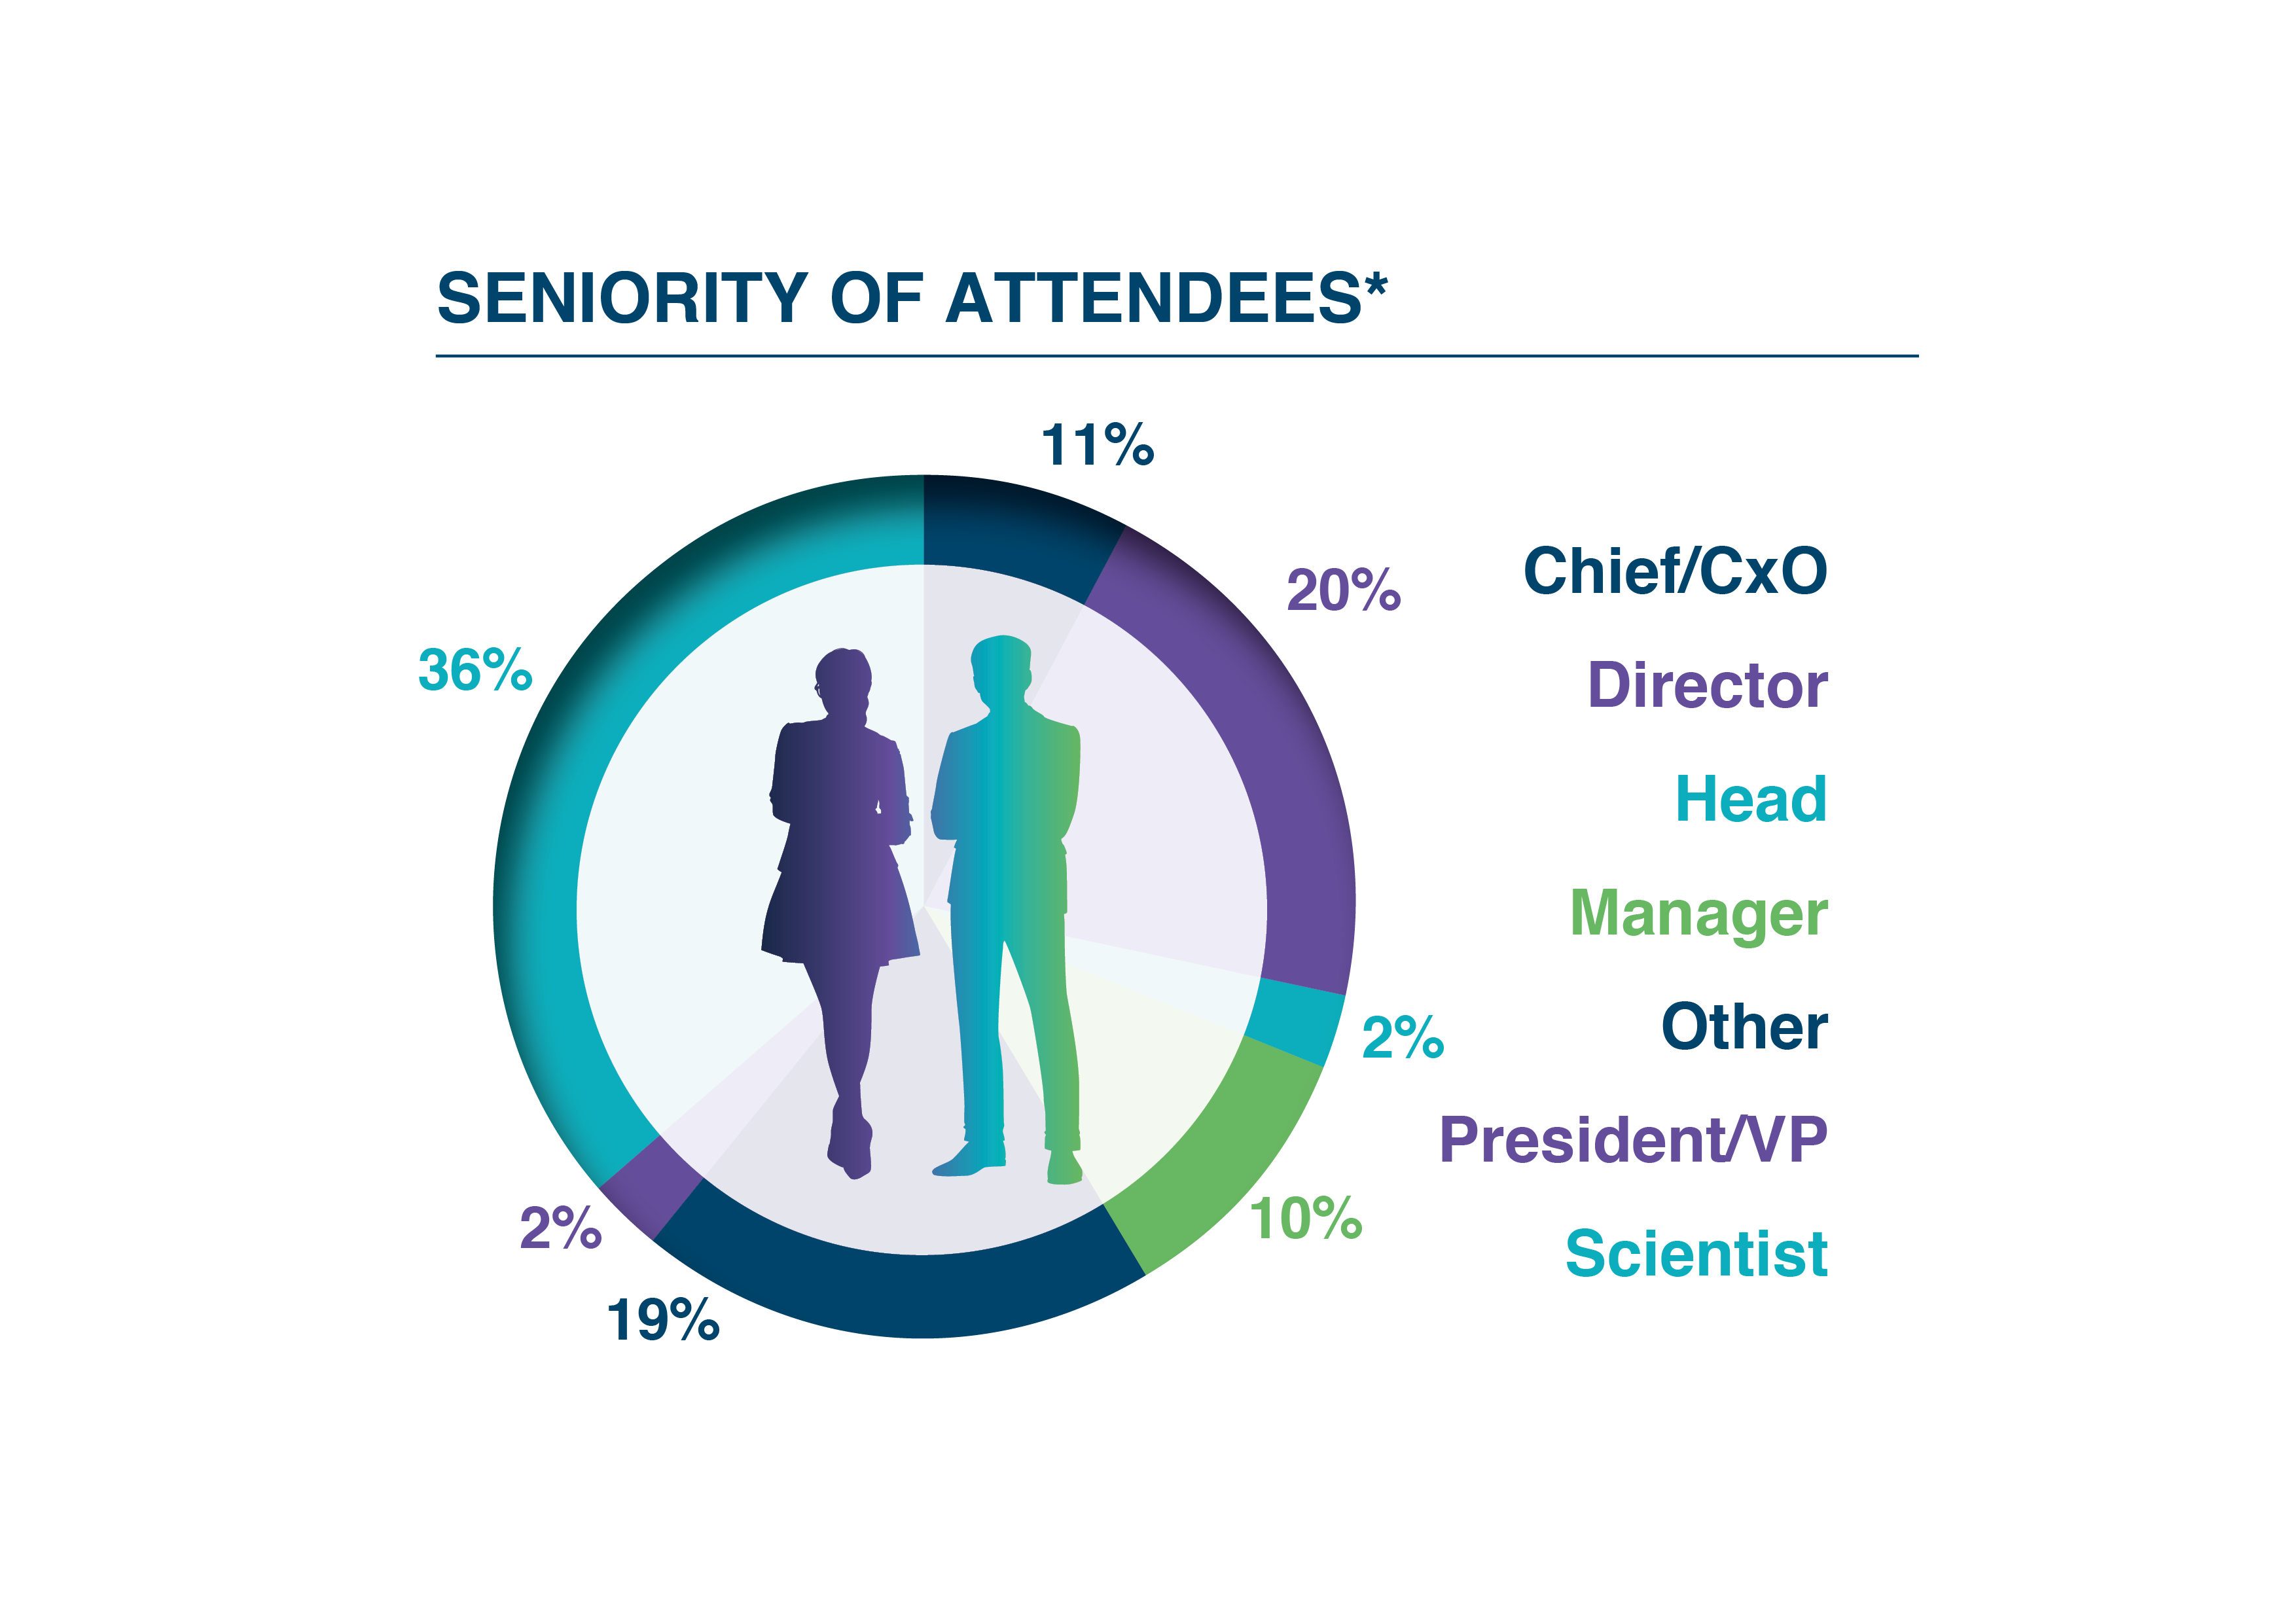 Seniority of Attendees